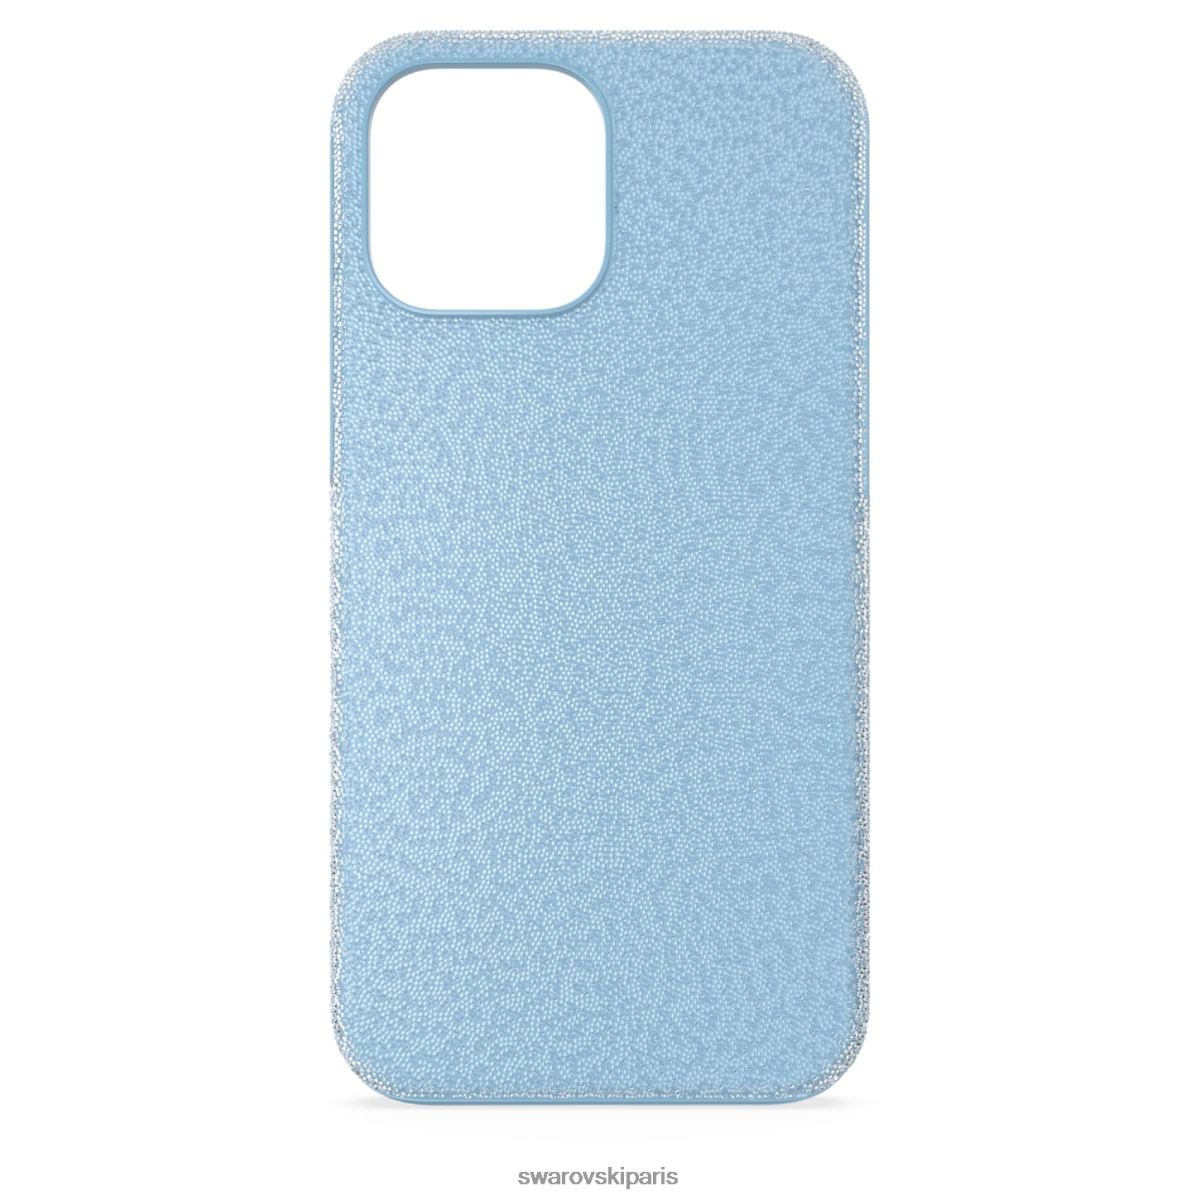 accessoires Swarovski coque haute pour smartphone i bleu RZD0XJ1333